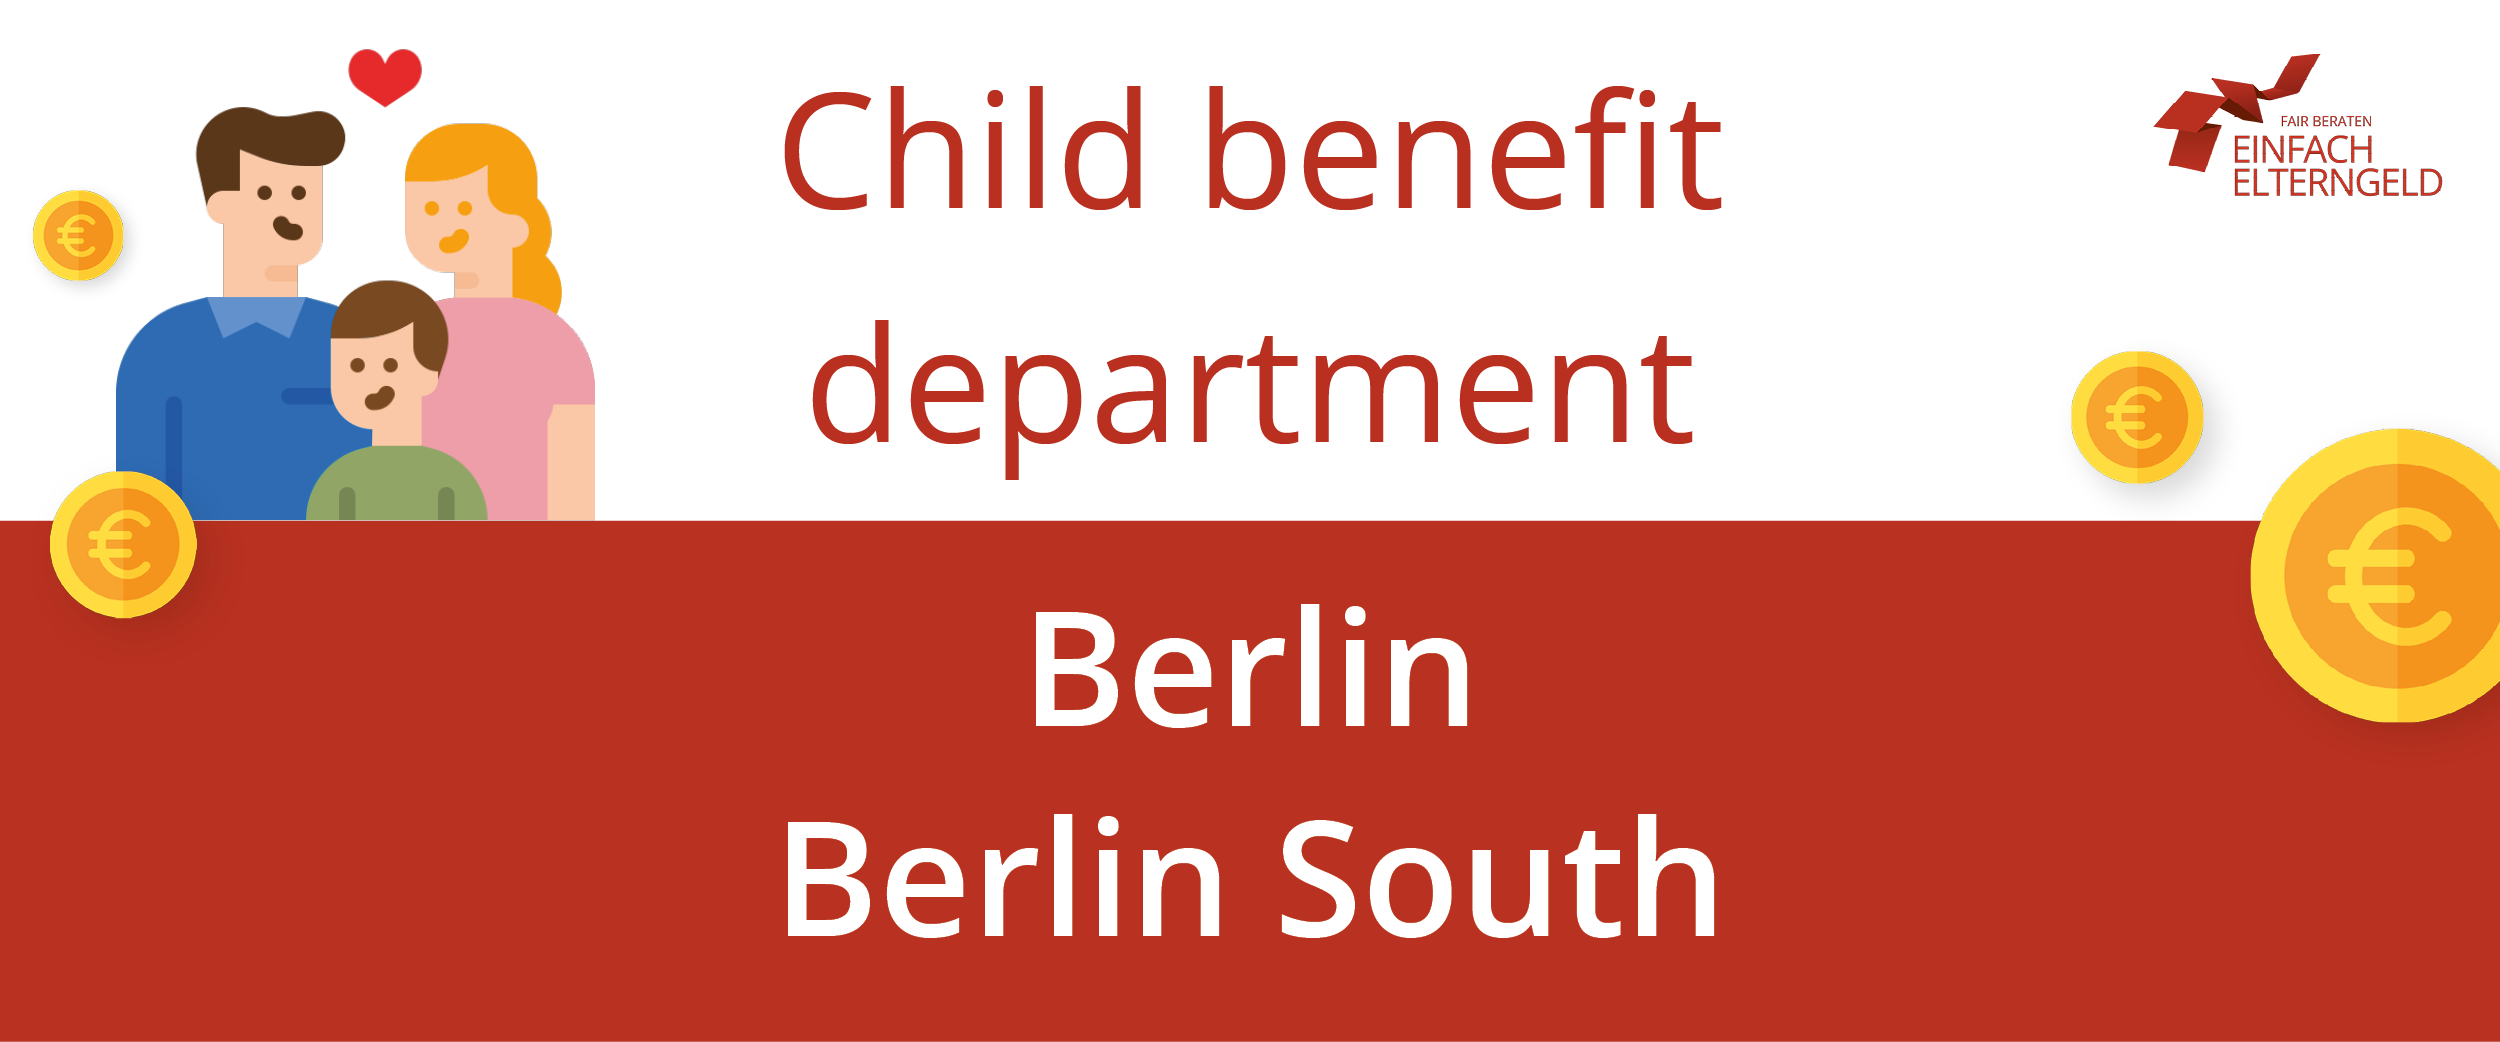 We present the Child benefit department Berlin Berlin South.